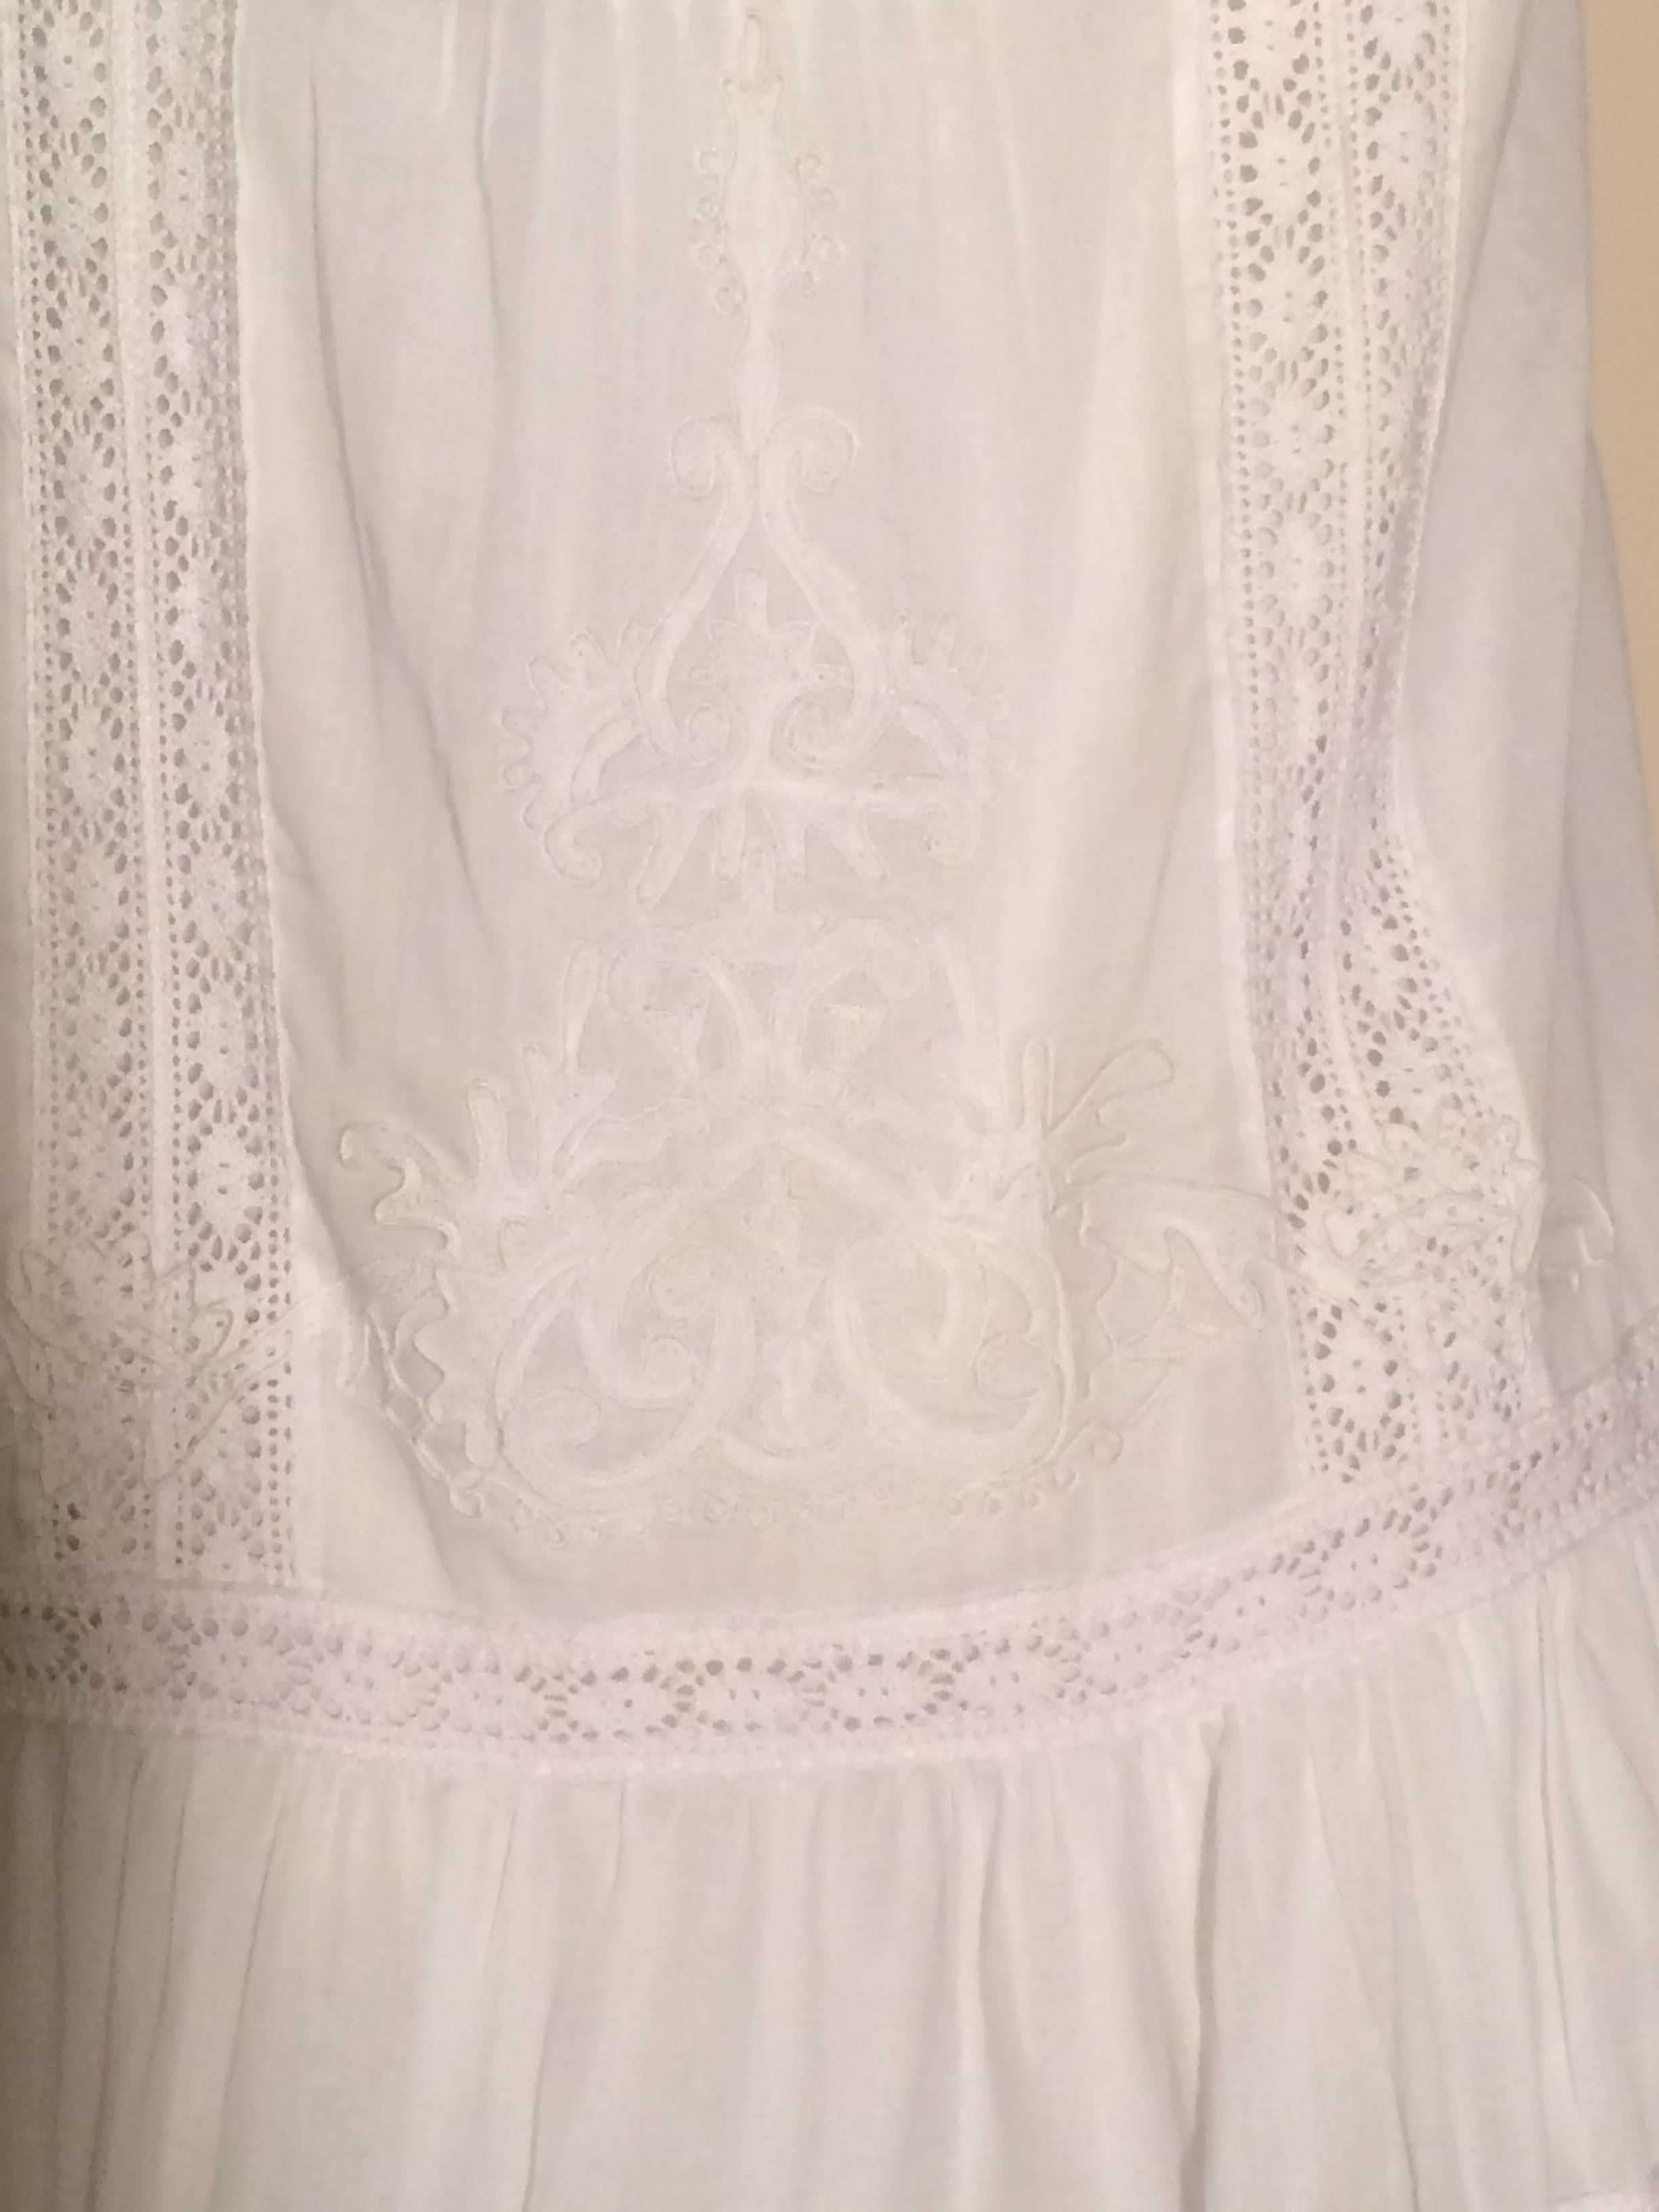 Beige Oscar de la Renta White Cotton Eyelet Lace Sun Dress, Spring 2010